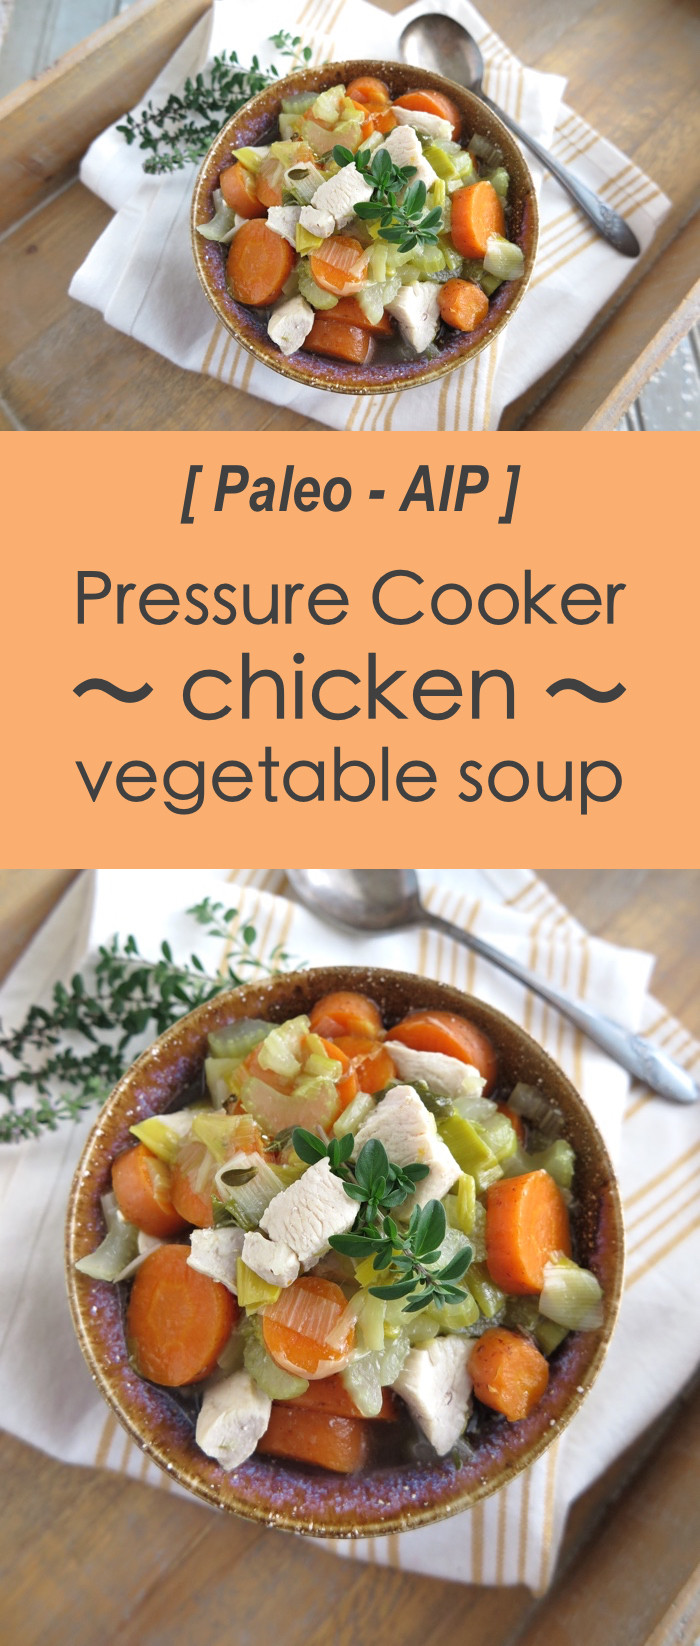 Paleo Chicken Vegetable Soup
 The Best Pressure Cooker Chicken Ve able Soup Paleo